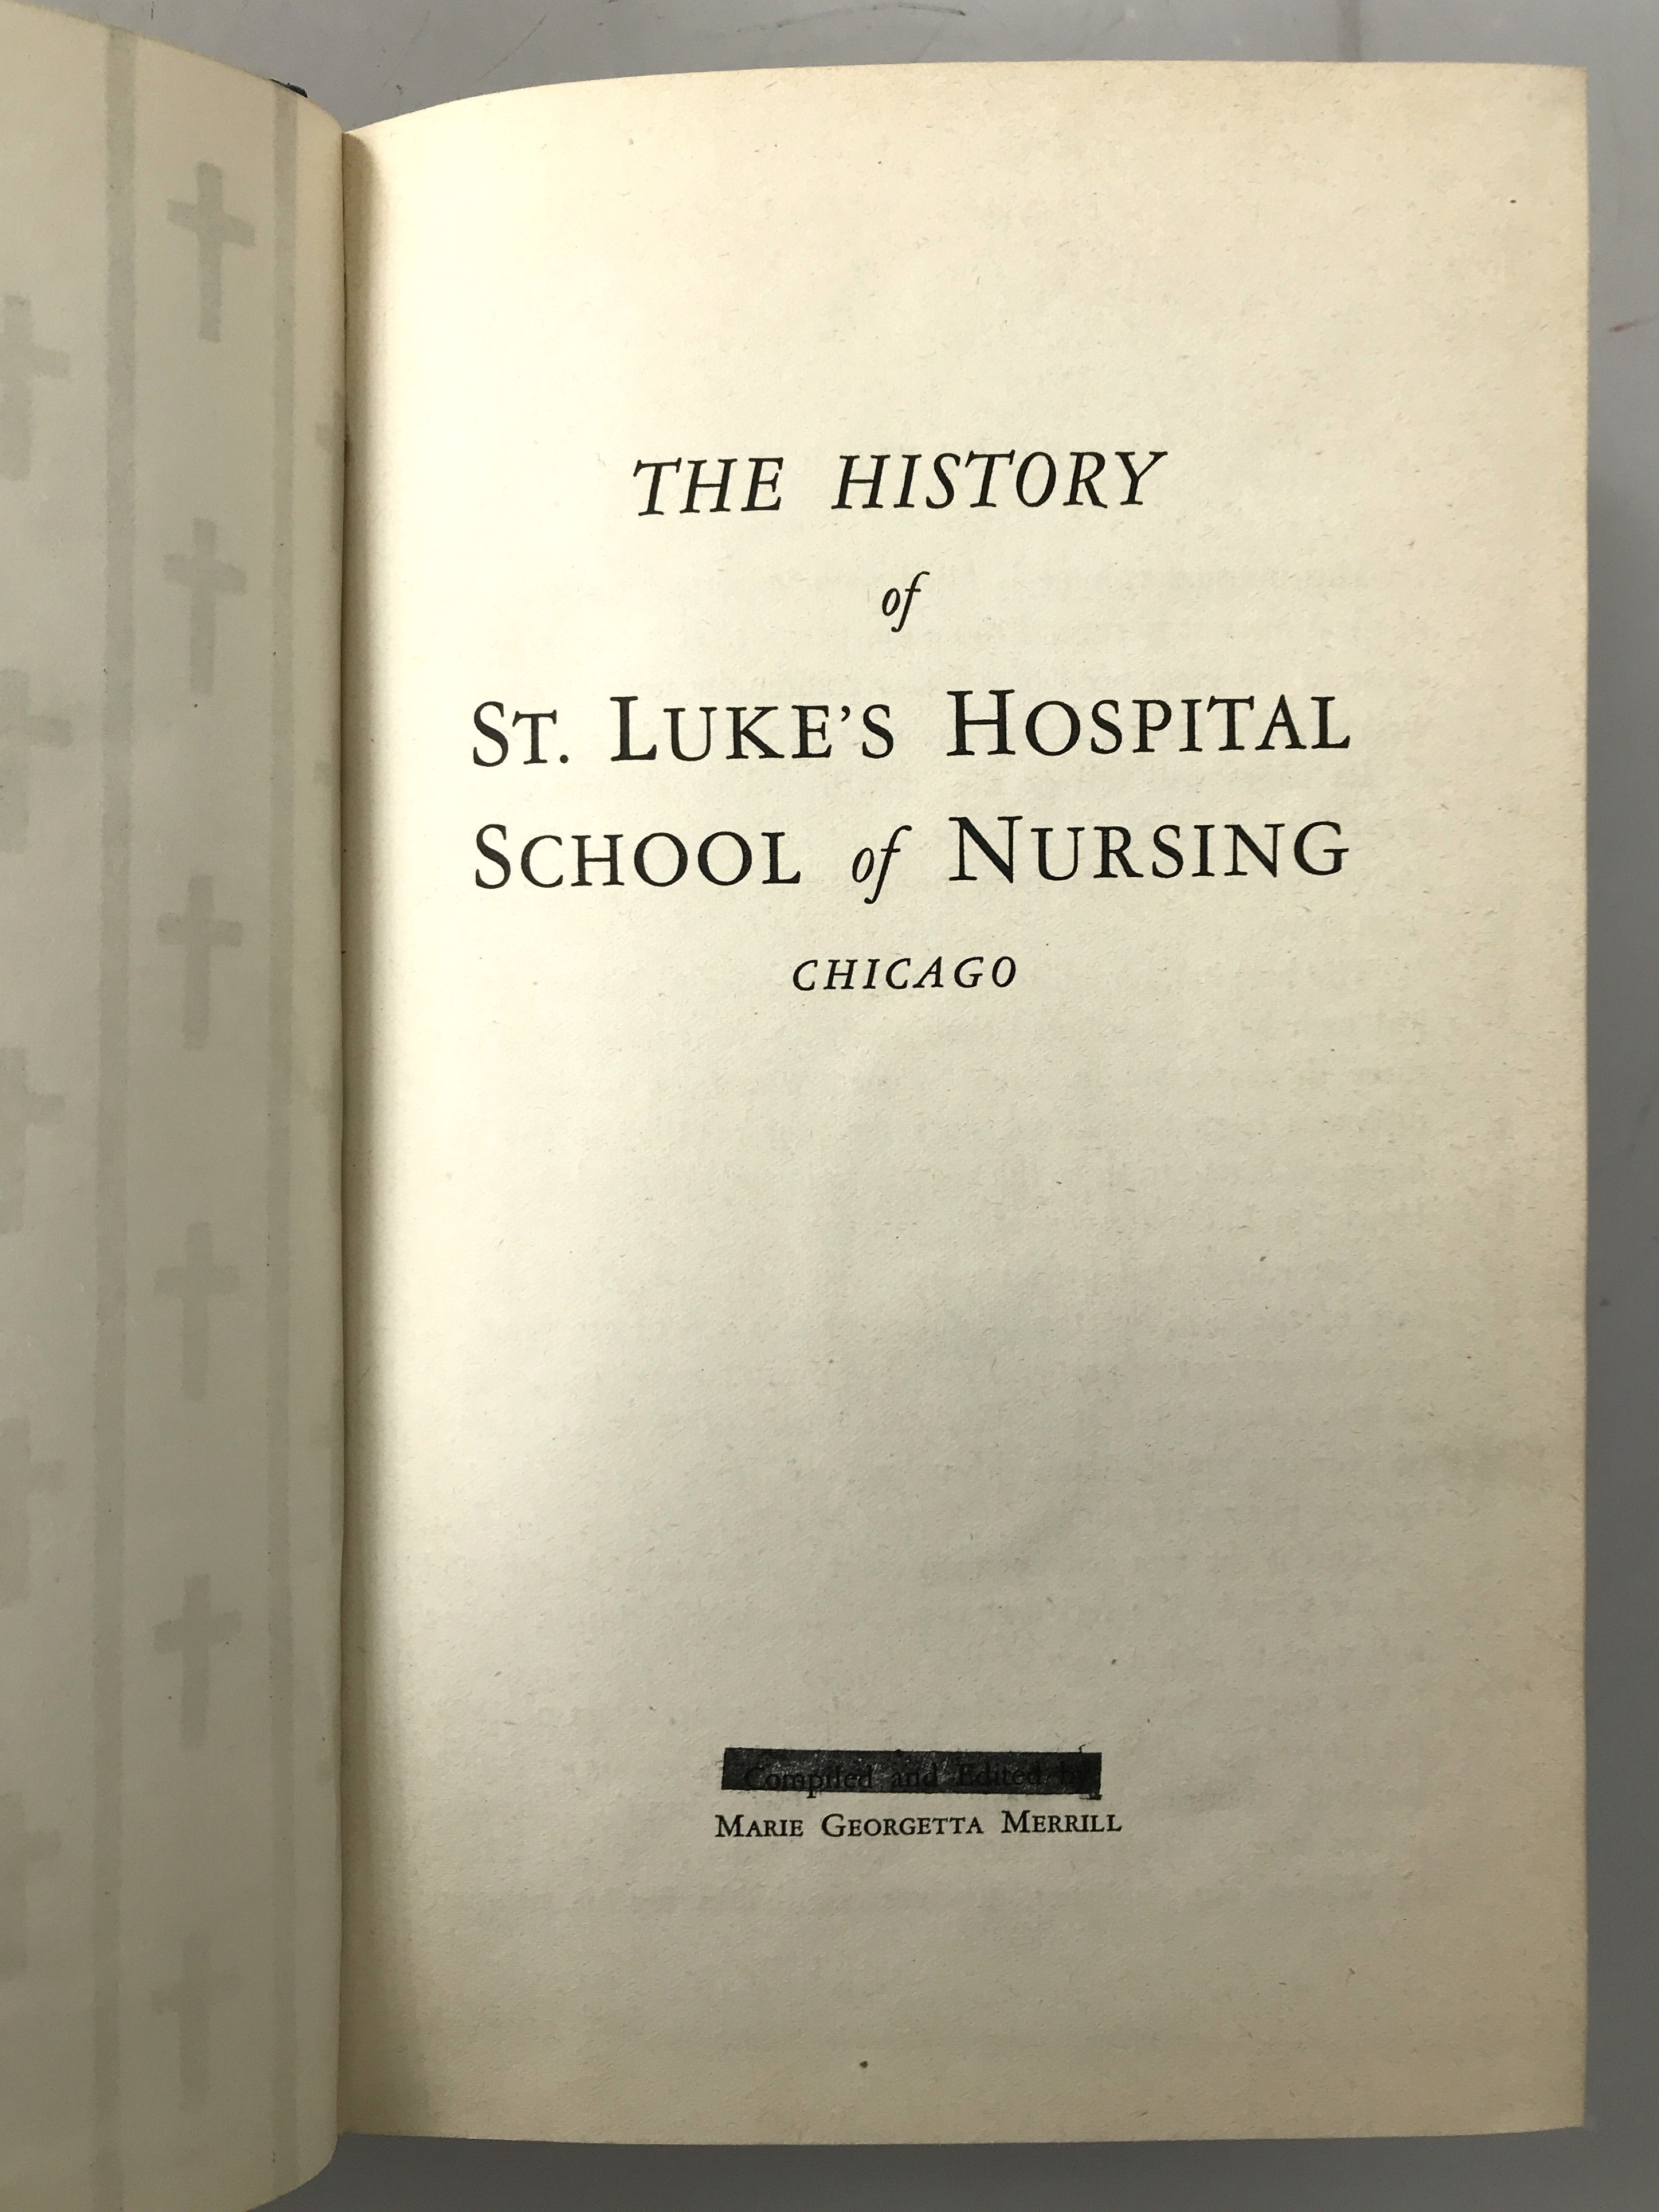 The History of St. Luke's Hospital School of Nursing Chicago by Marie Merrill HC